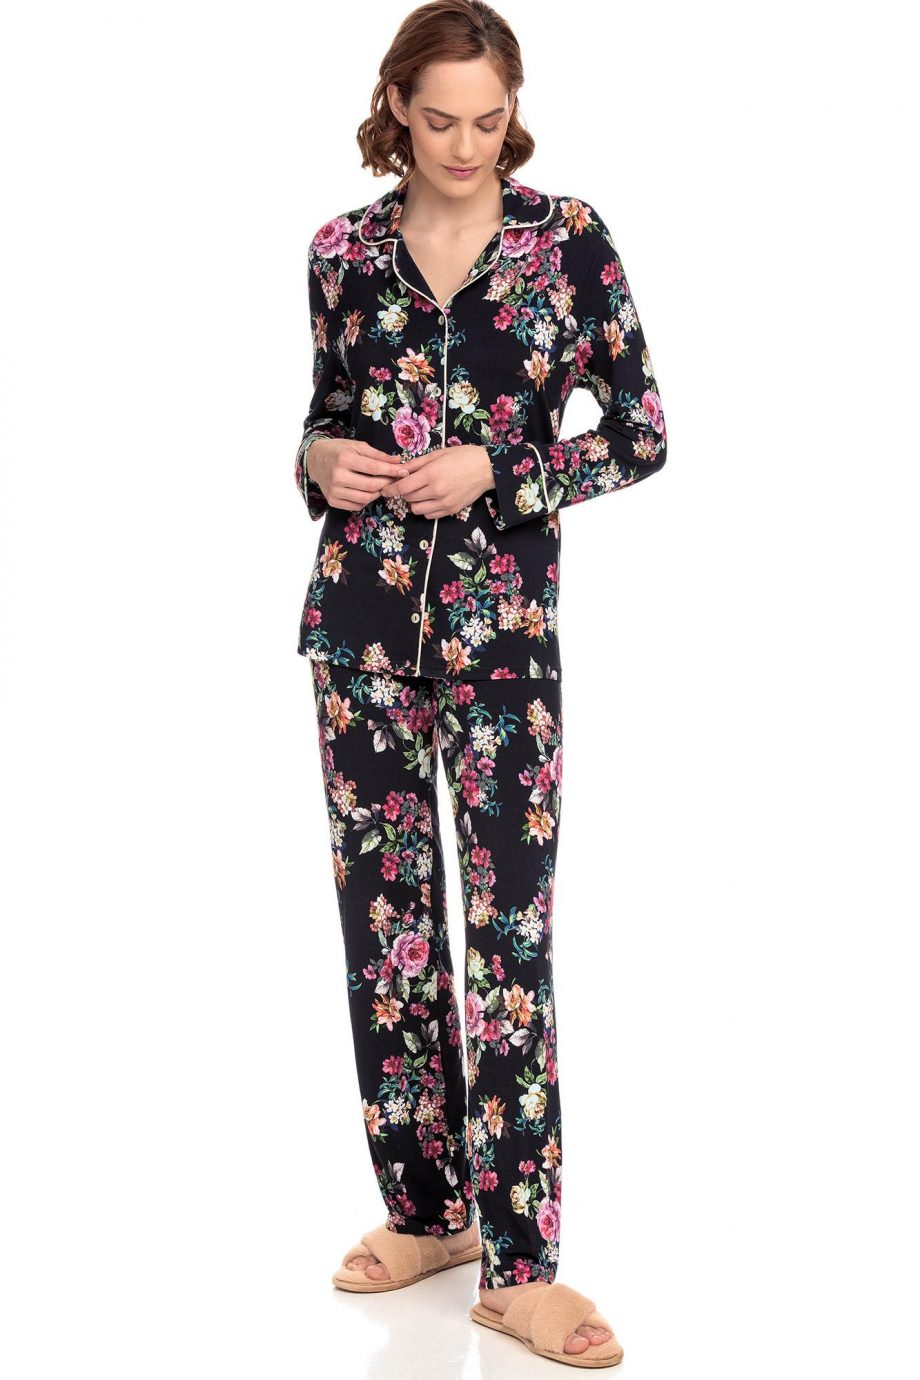 Floral buttoned Pyjamas